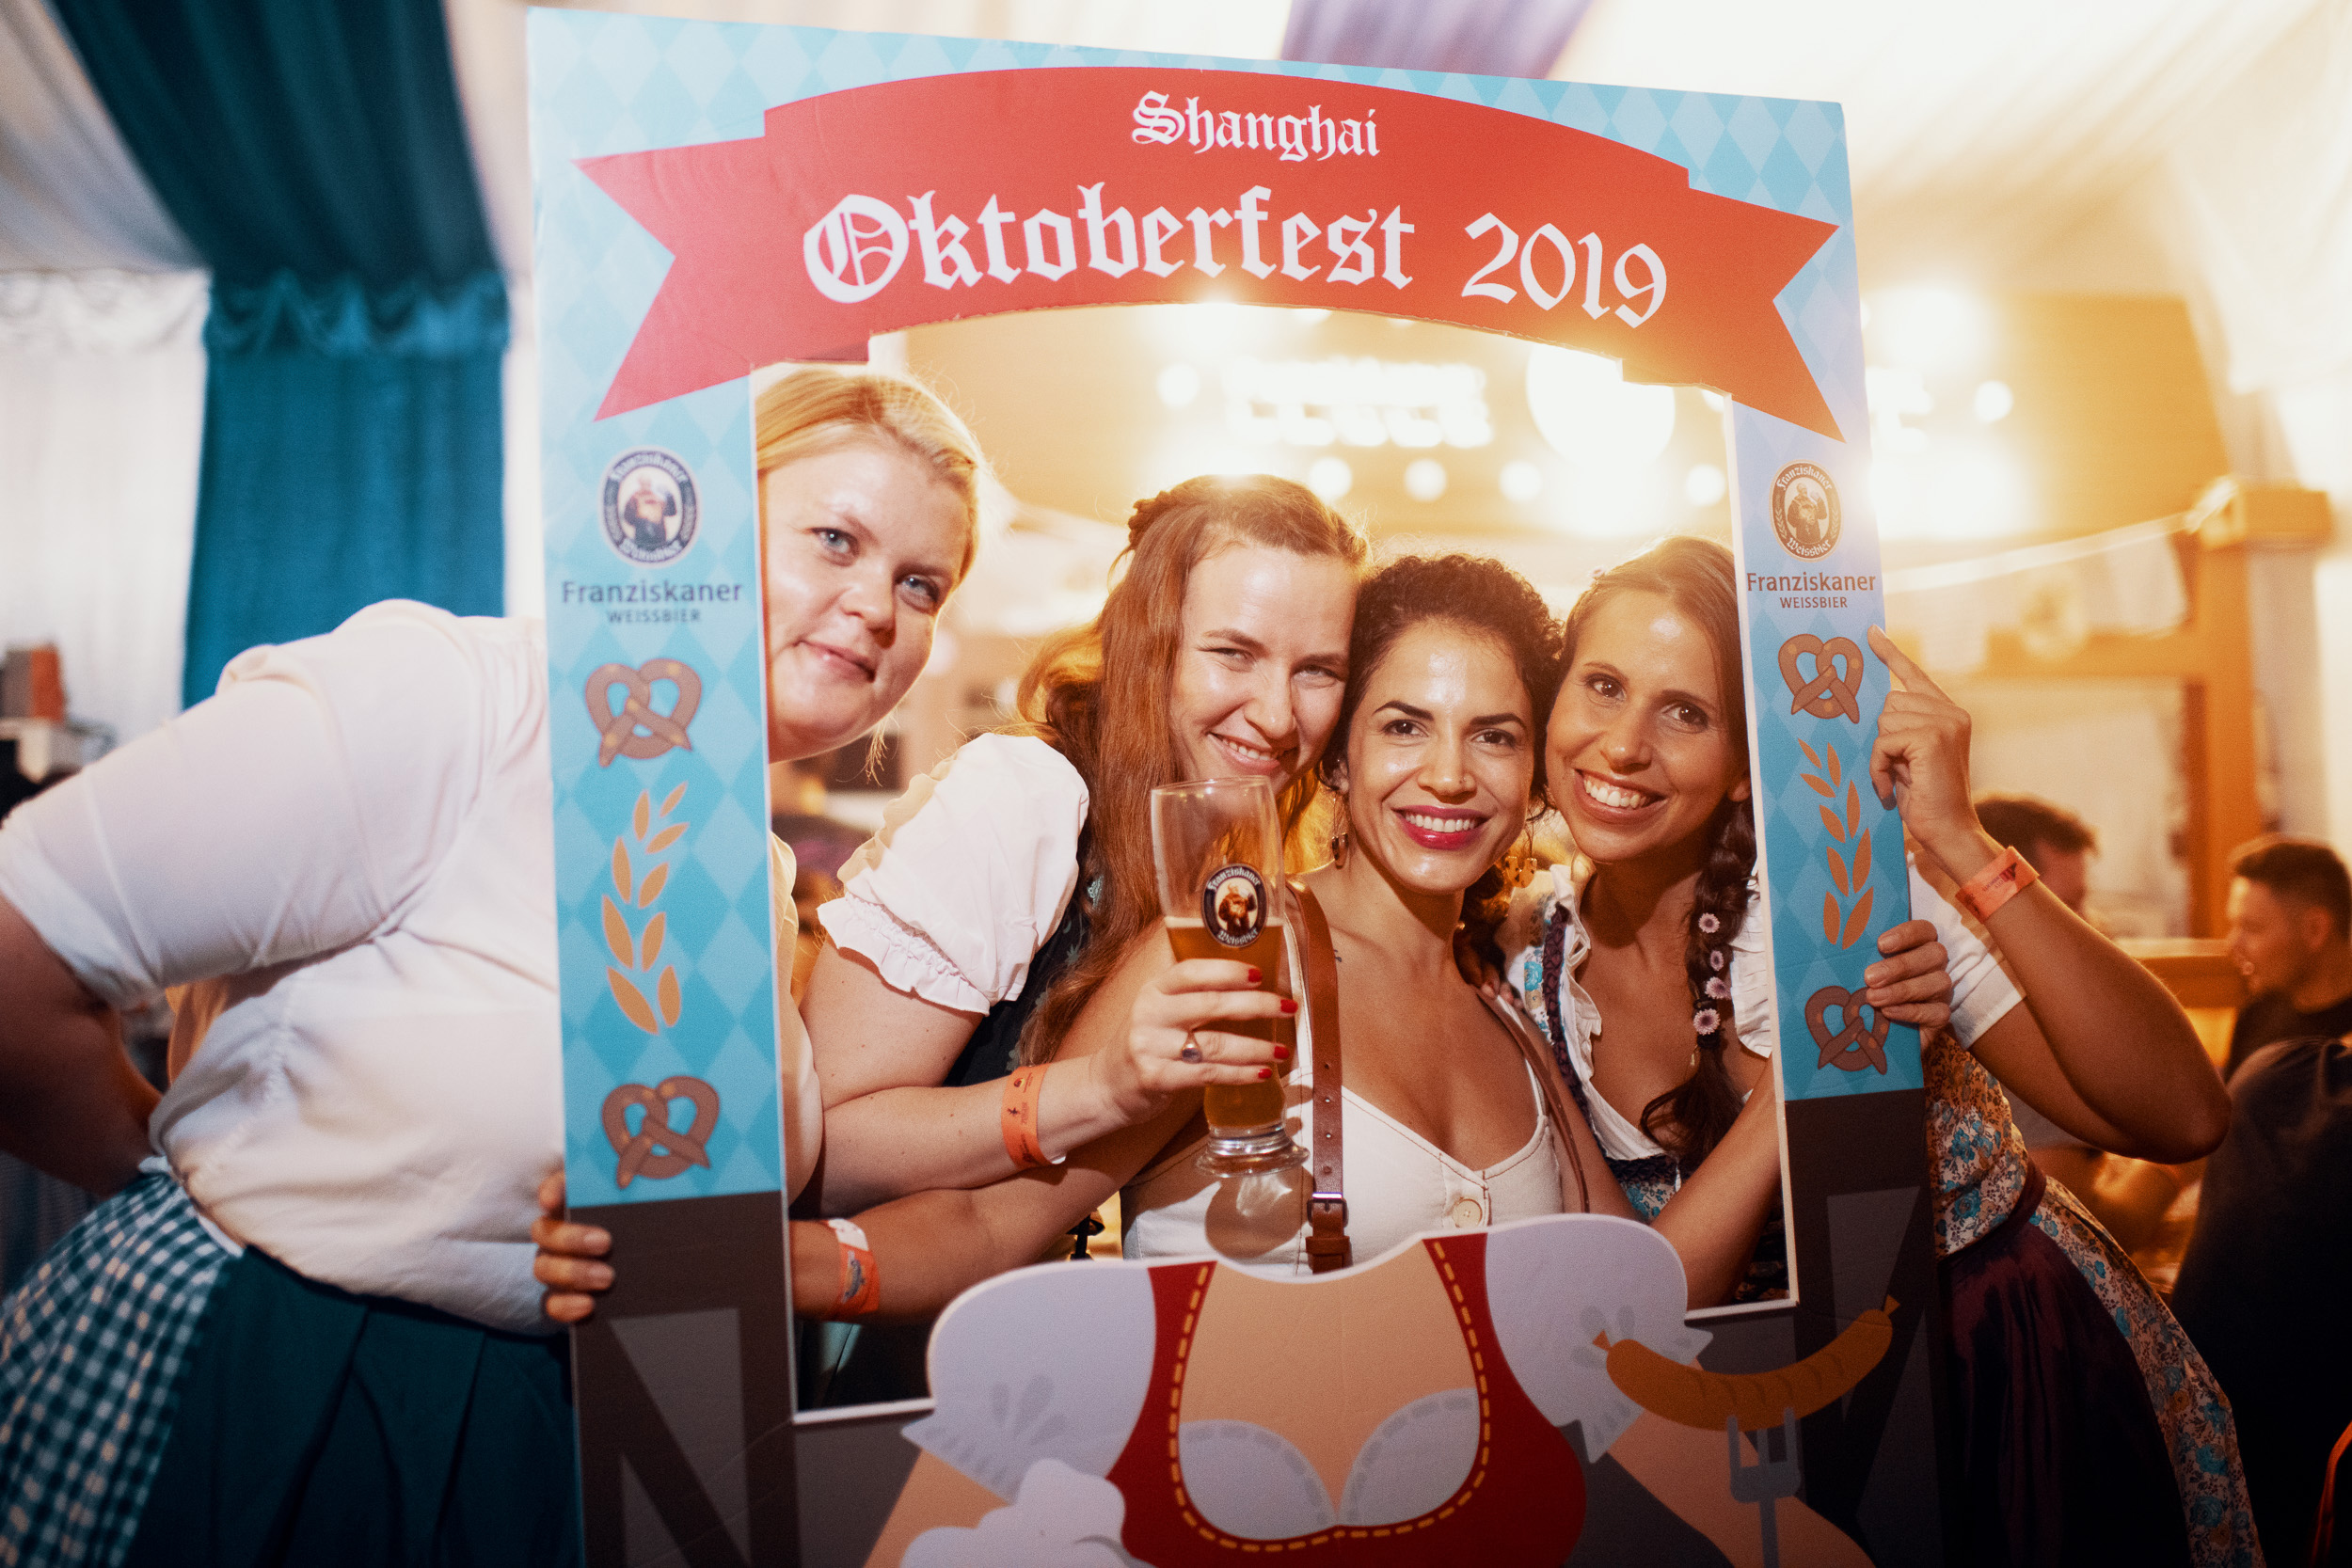 Oktoberfest Shanghai: How to Celebrate German Culture and Beer